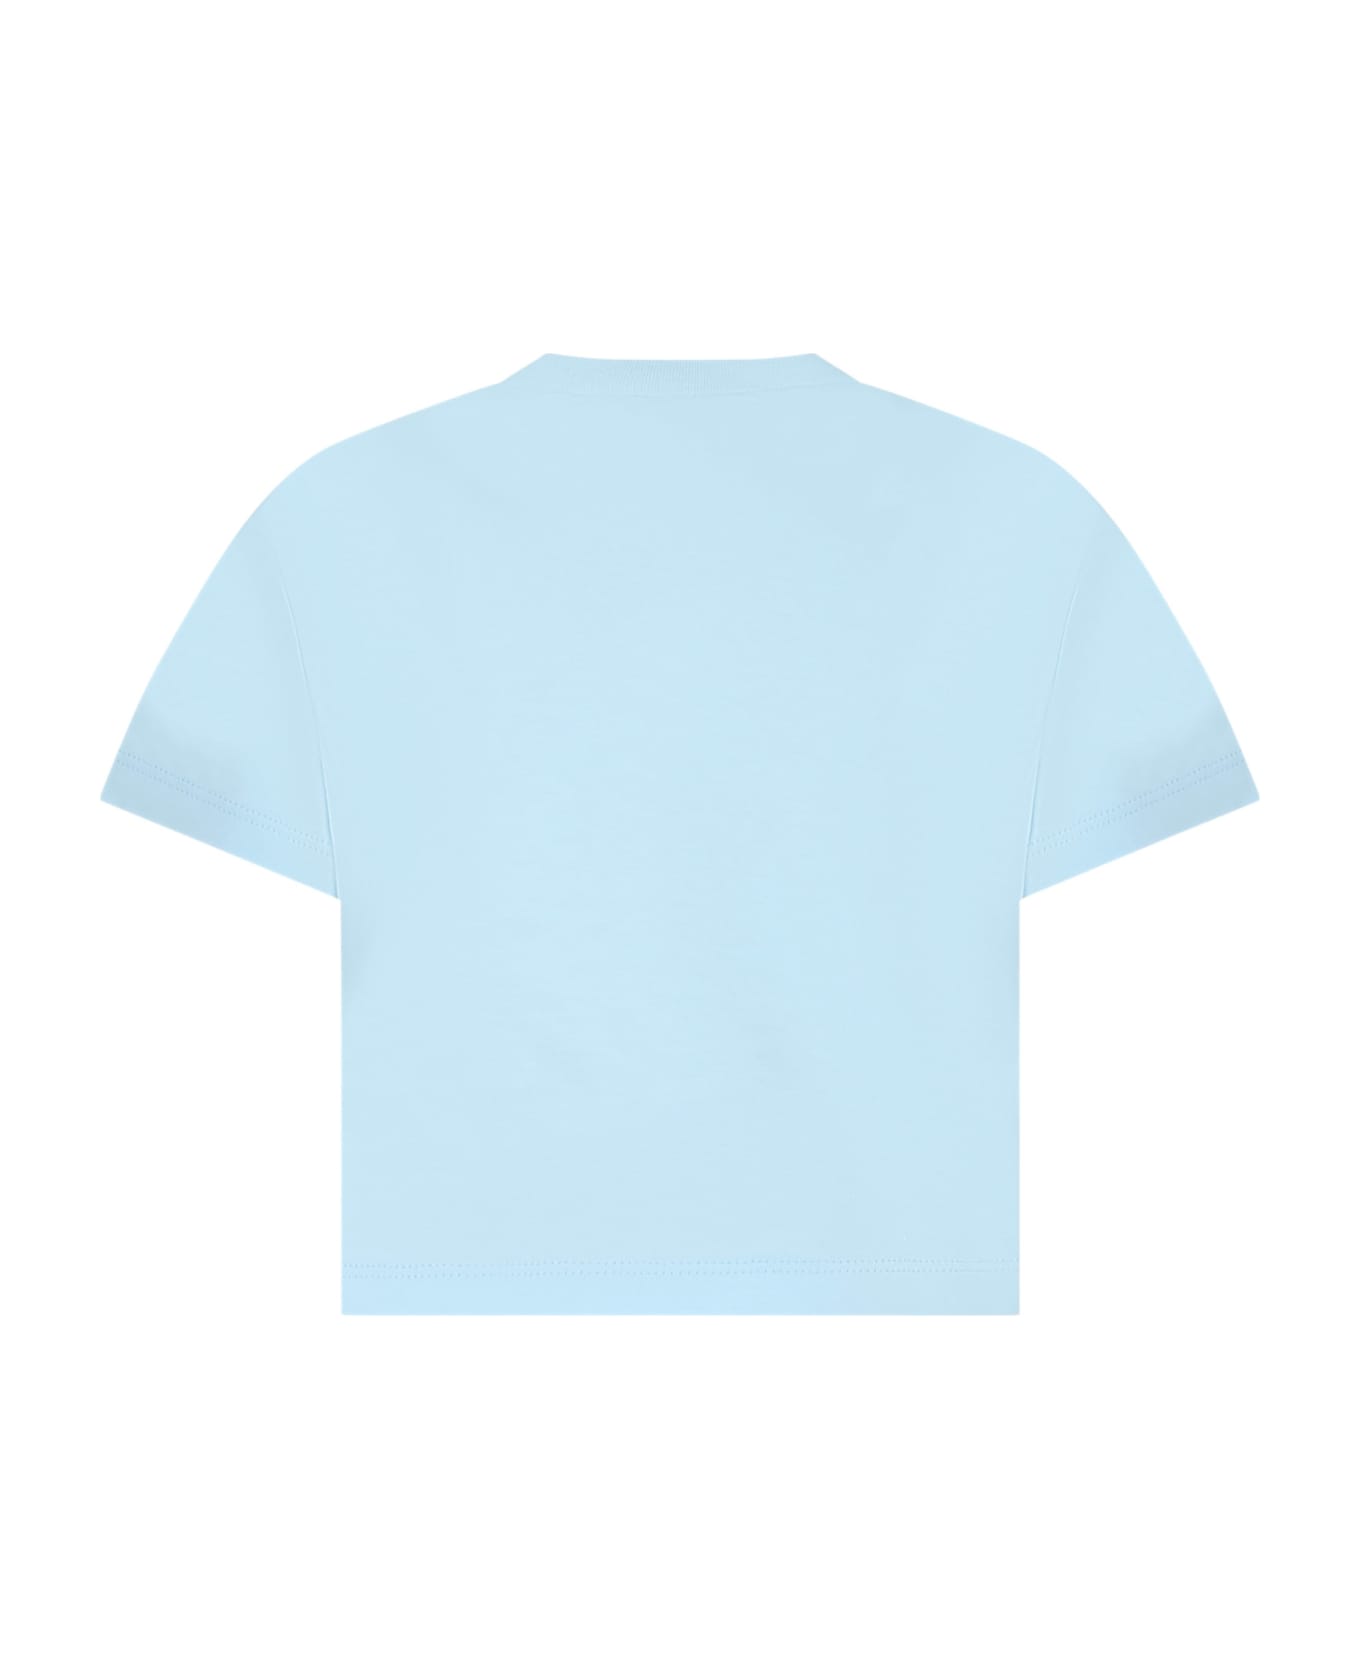 Marni Light Blue Crop T-shirt For Girl With Logo - Light Blue